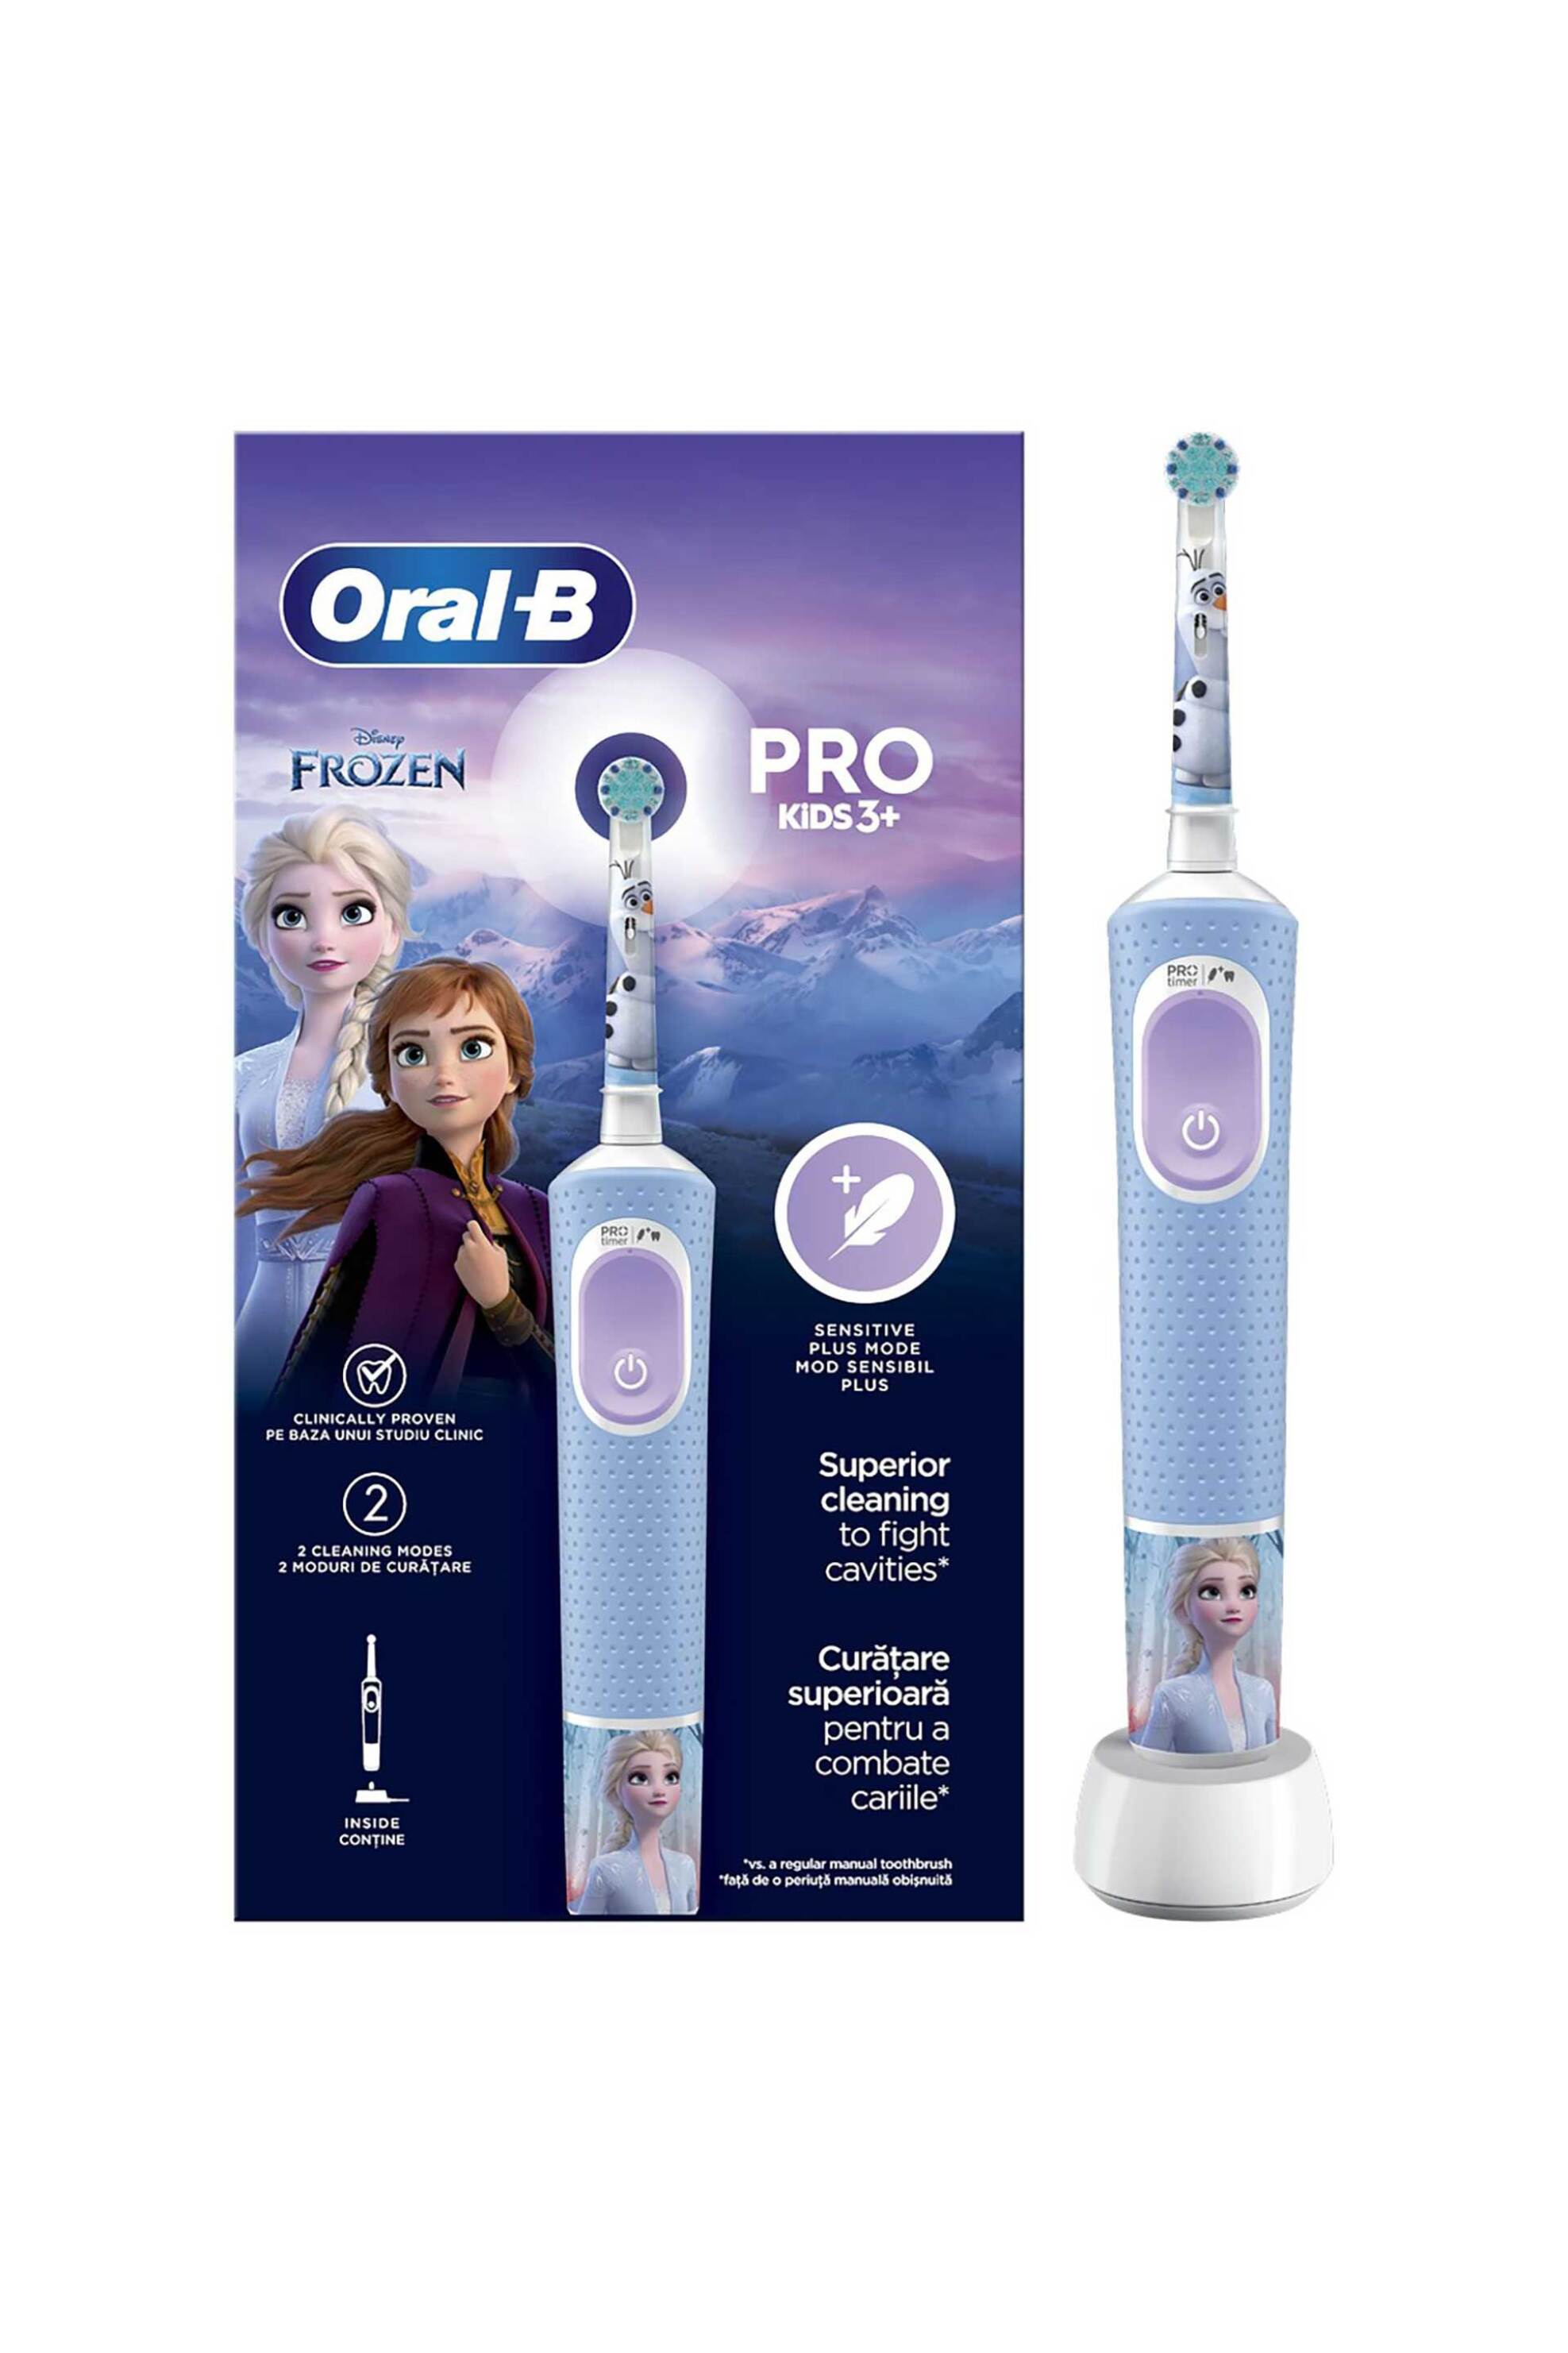 Home > ΣΥΣΚΕΥΕΣ ΠΕΡΙΠΟΙΗΣΗΣ > Ηλεκτρικές Οδοντόβουρτσες Braun ηλεκτρική οδοντόβουρτσα για παιδιά "Oral-B Vitality Pro Kids Frozen" - 80720356